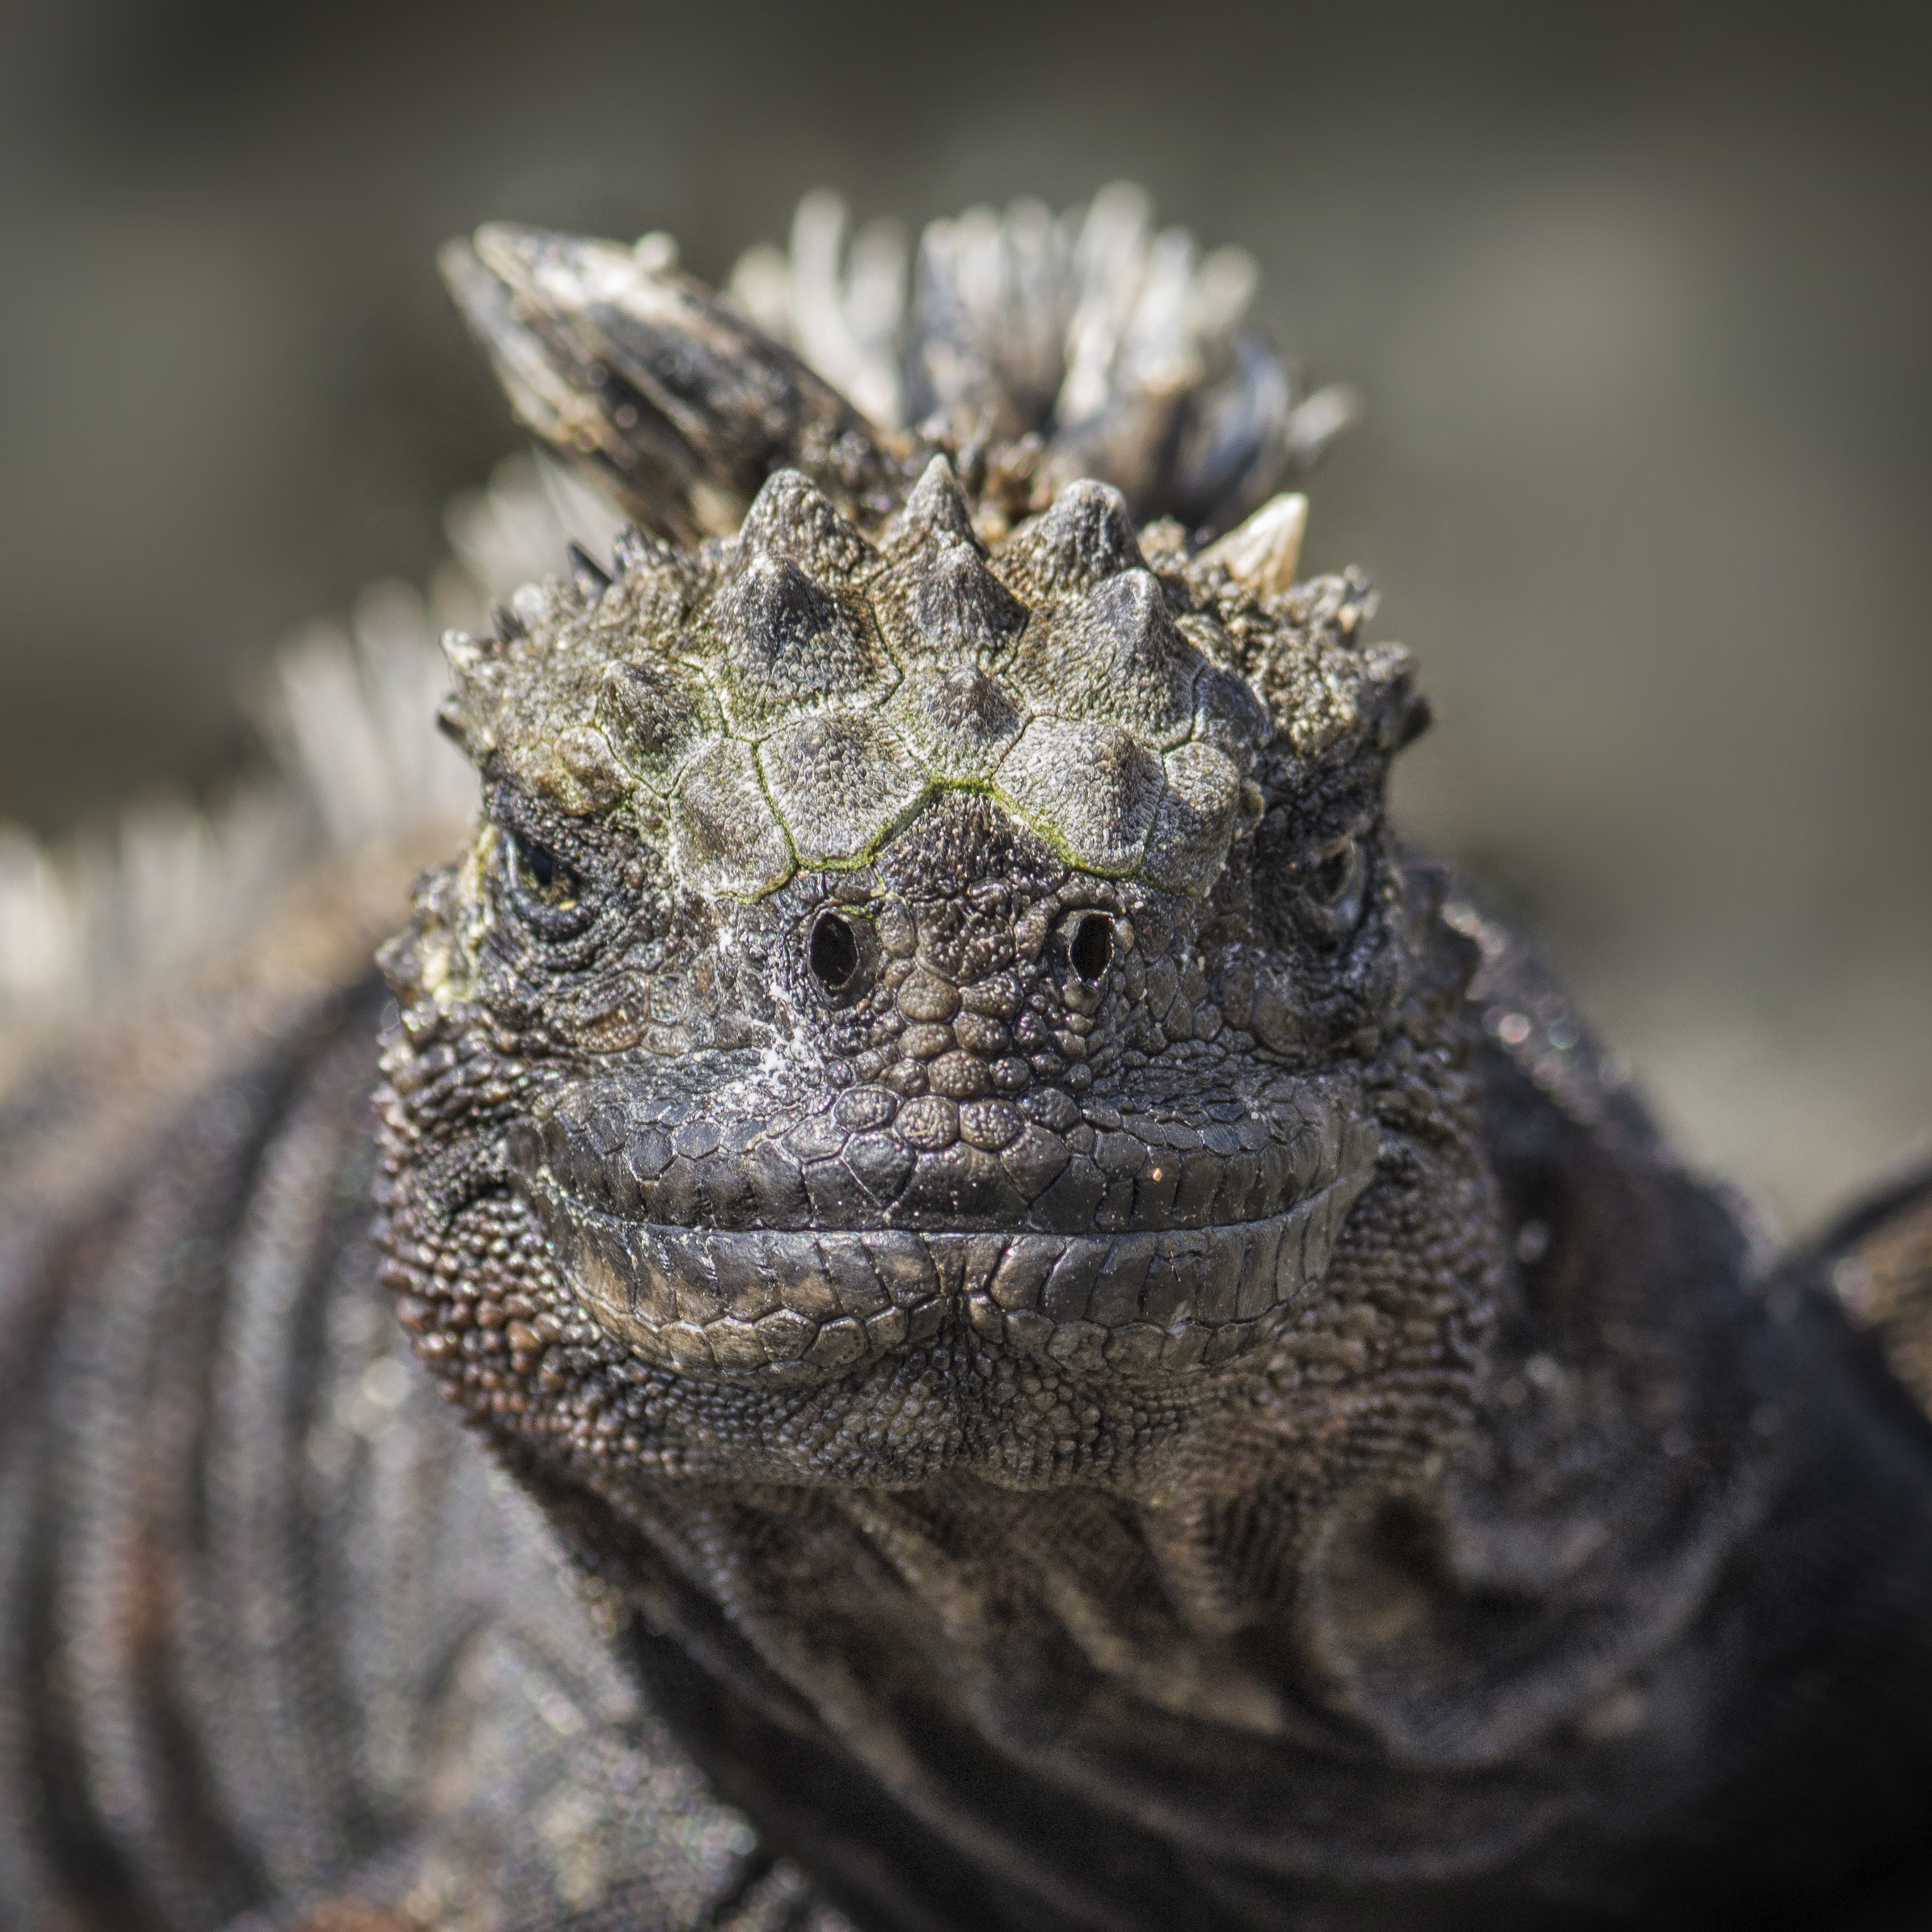 What kind of animal is Godzilla? Is he a marine iguana?